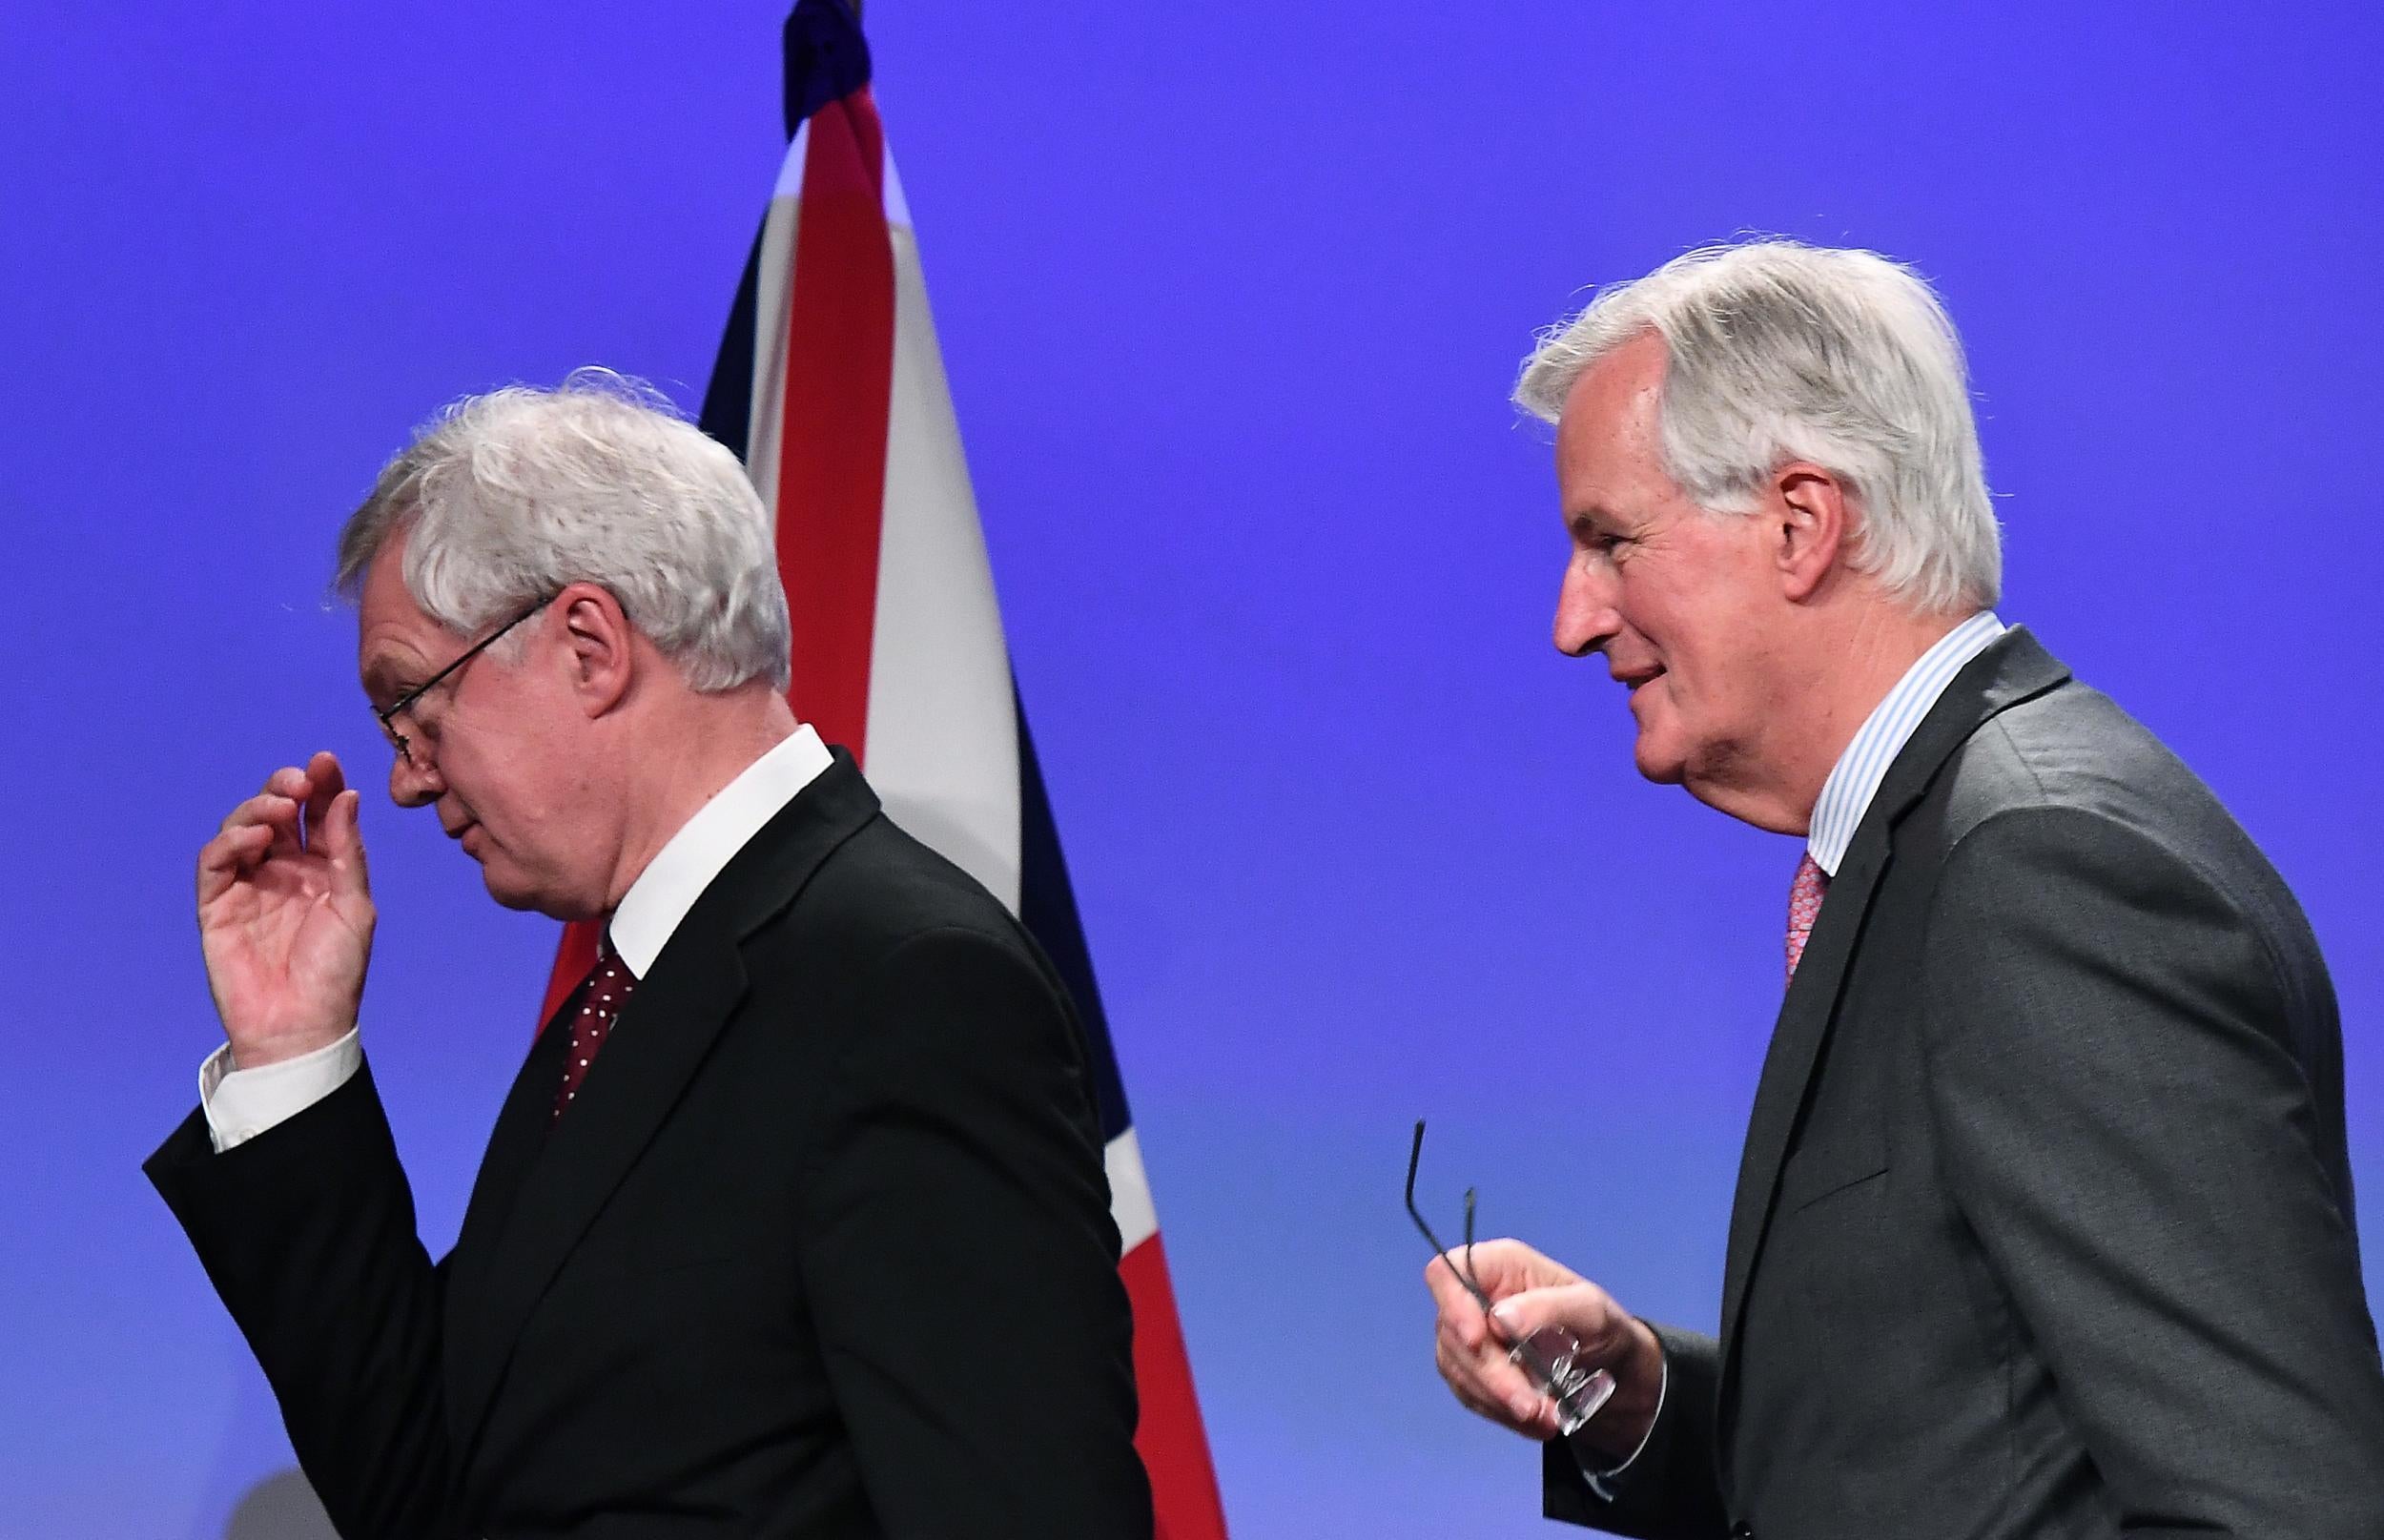 Brexit Secretary David Davis and Chief Negotiator Michel Barnier